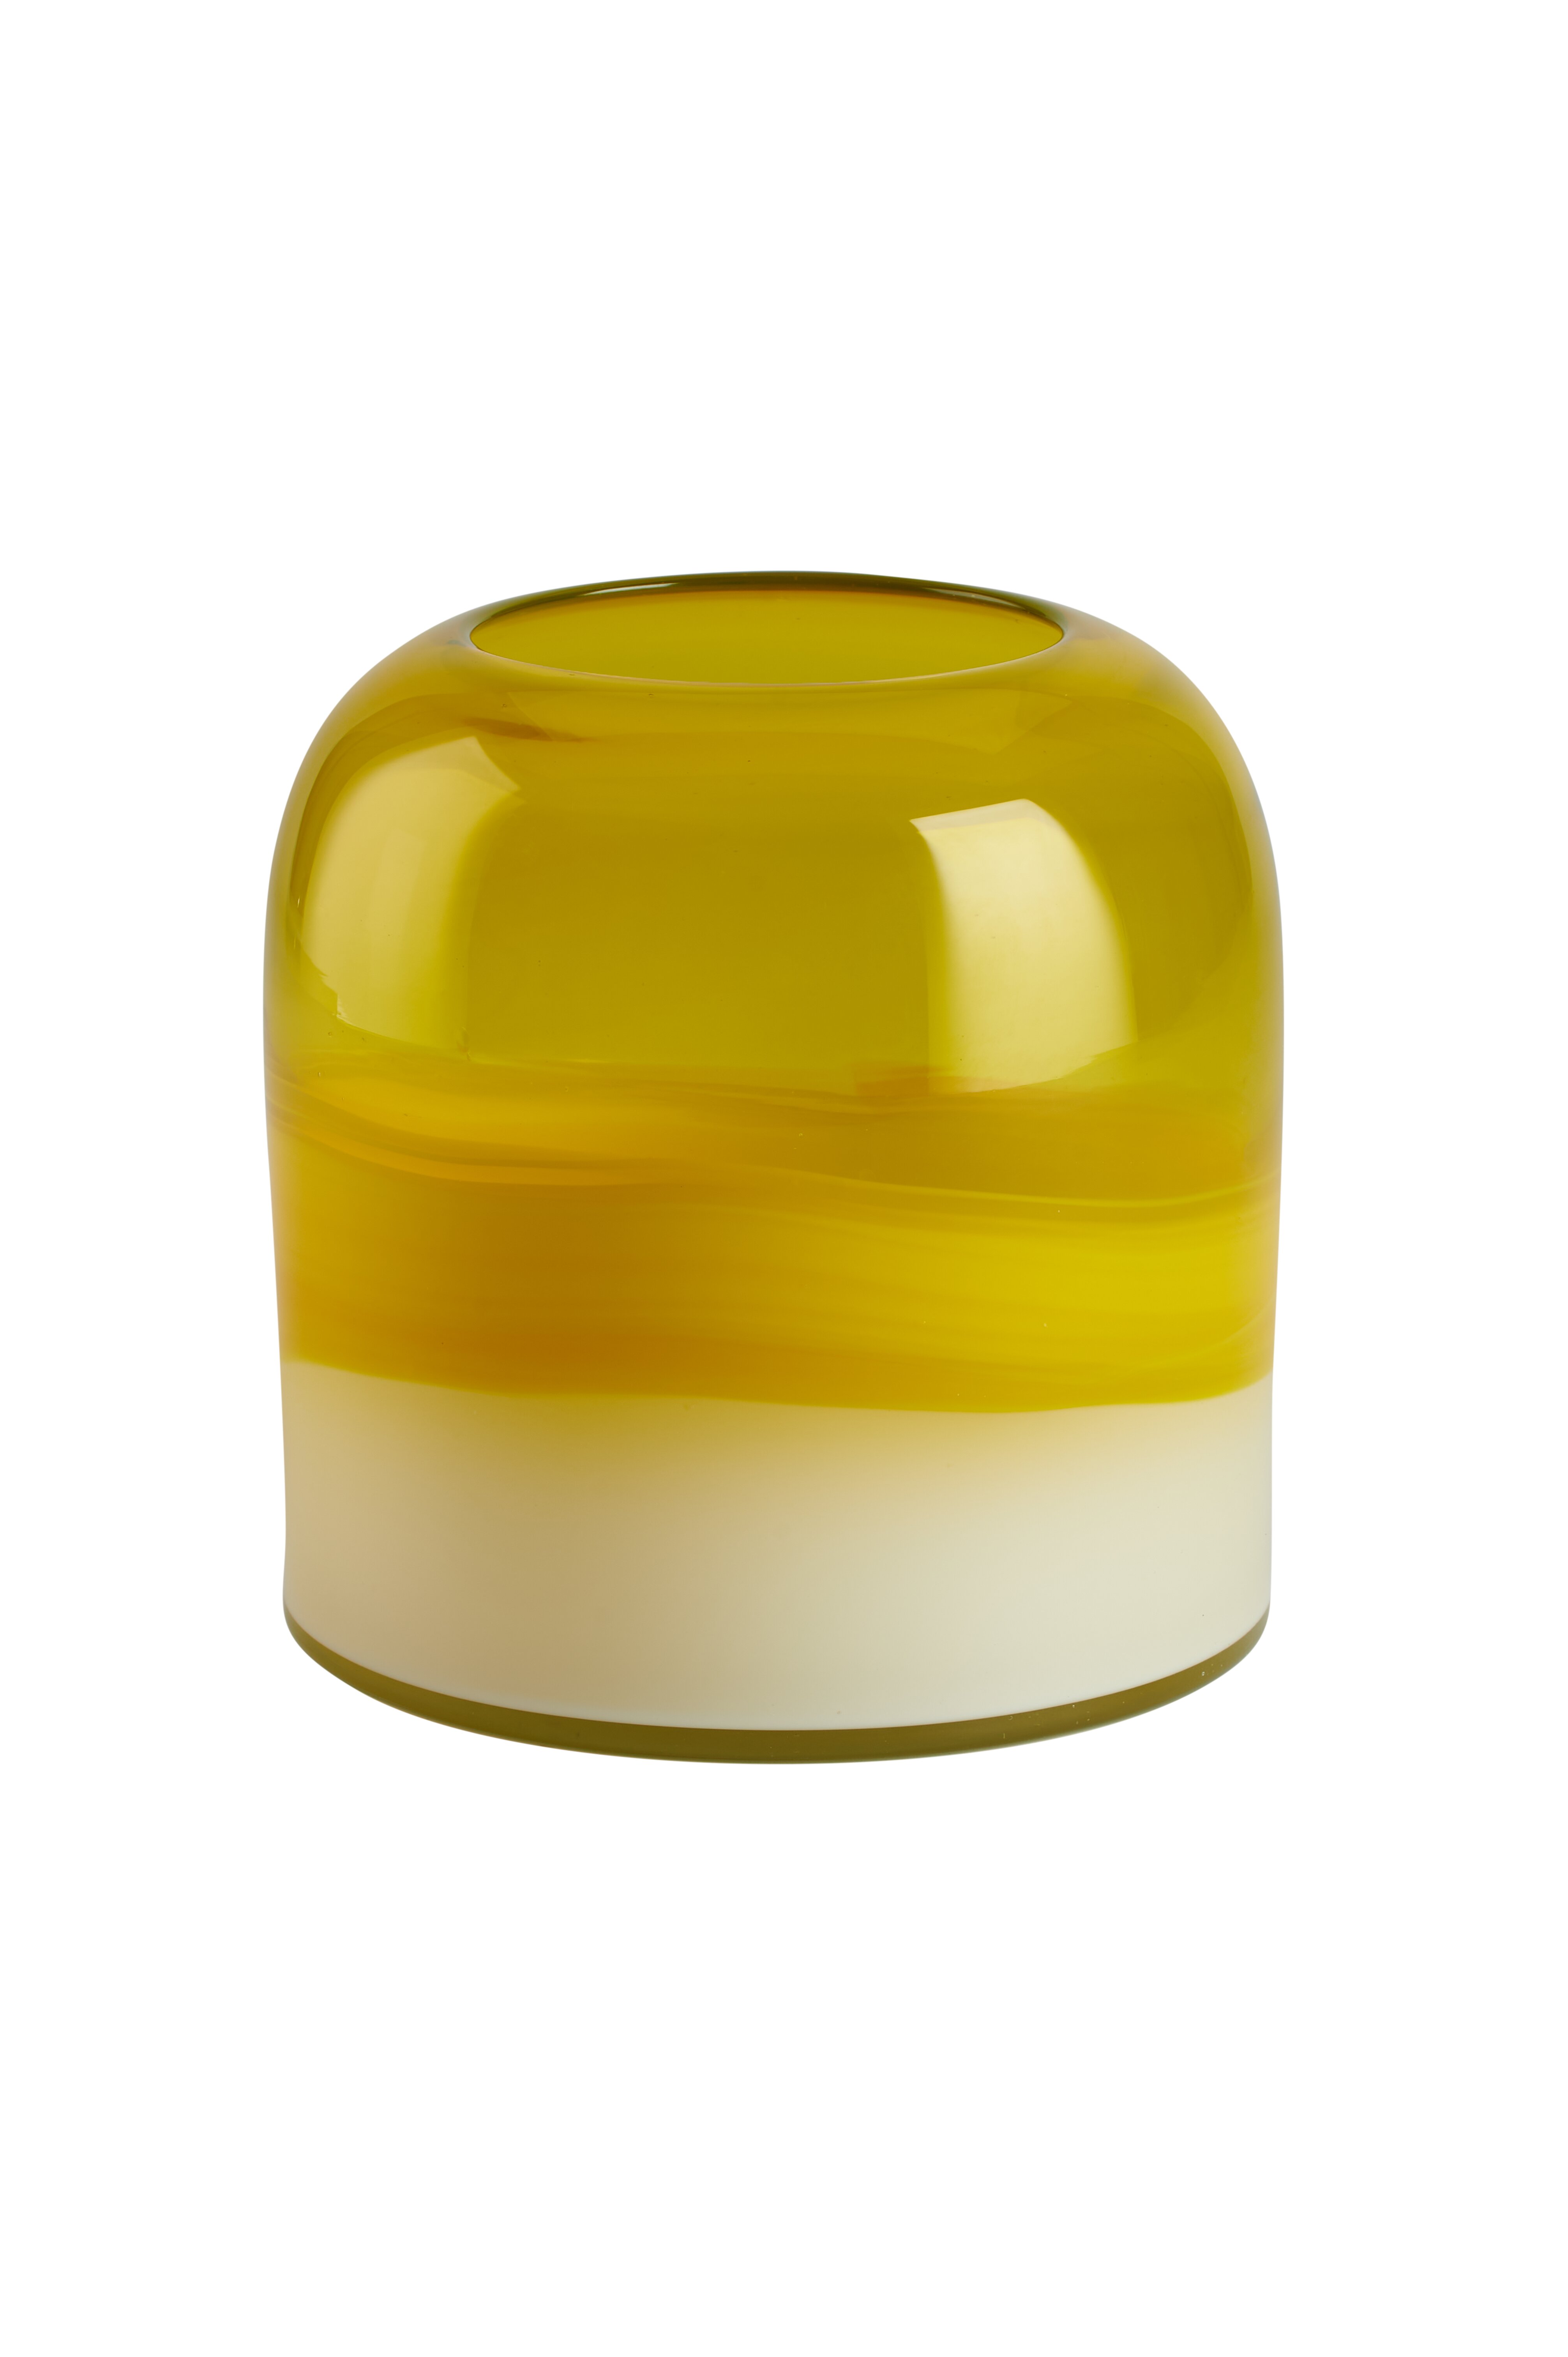 Chiffon, vase, H17cm, yellow/white, solid